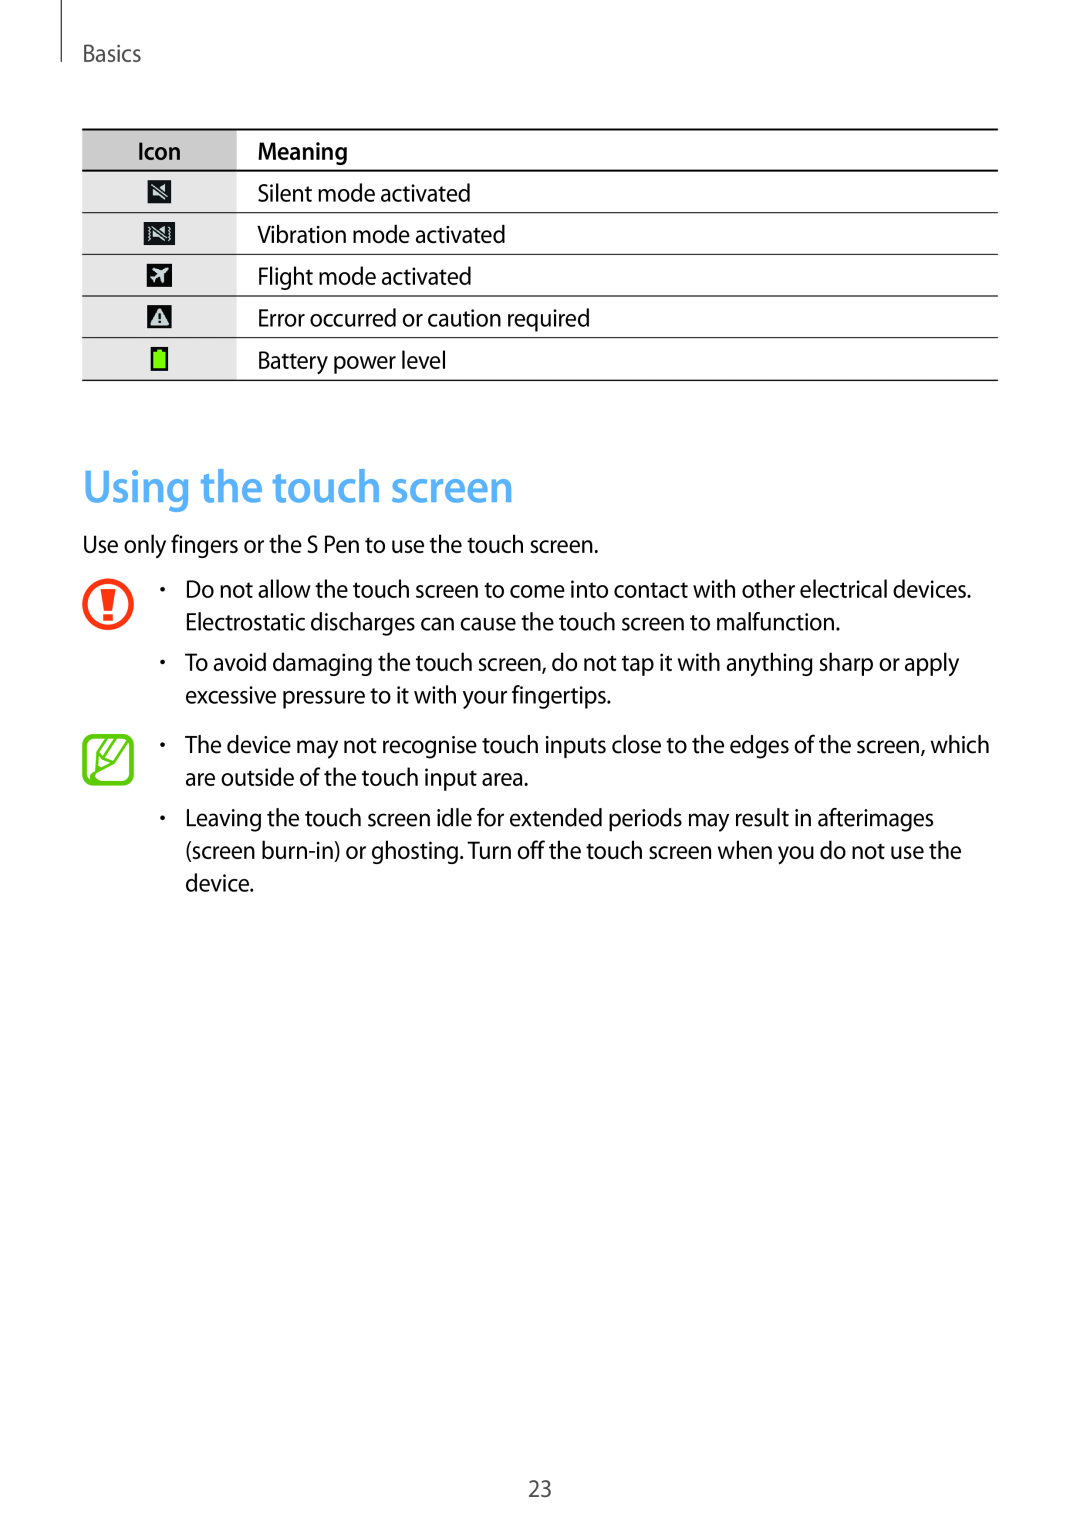 Samsung SM-N9005ZKEAFR, SM-N9005ZKEEGY, SM-N9005ZIEEGY, SM-N9005ZIEKSA manual Using the touch screen, Basics, Icon Meaning 